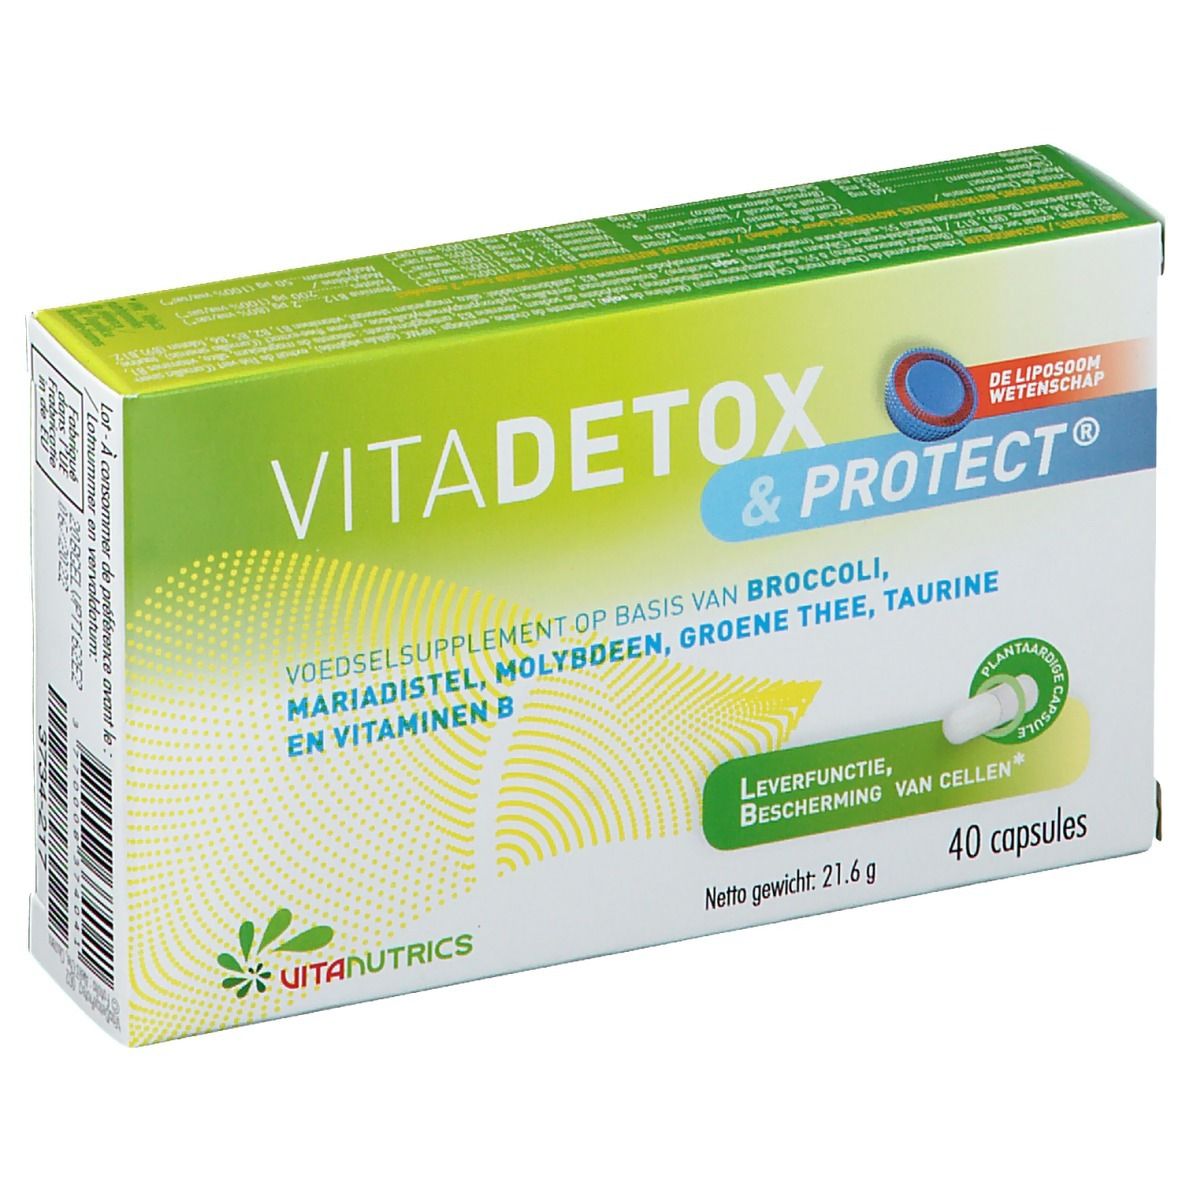 Vitanutrics VitaDetox & Protect®